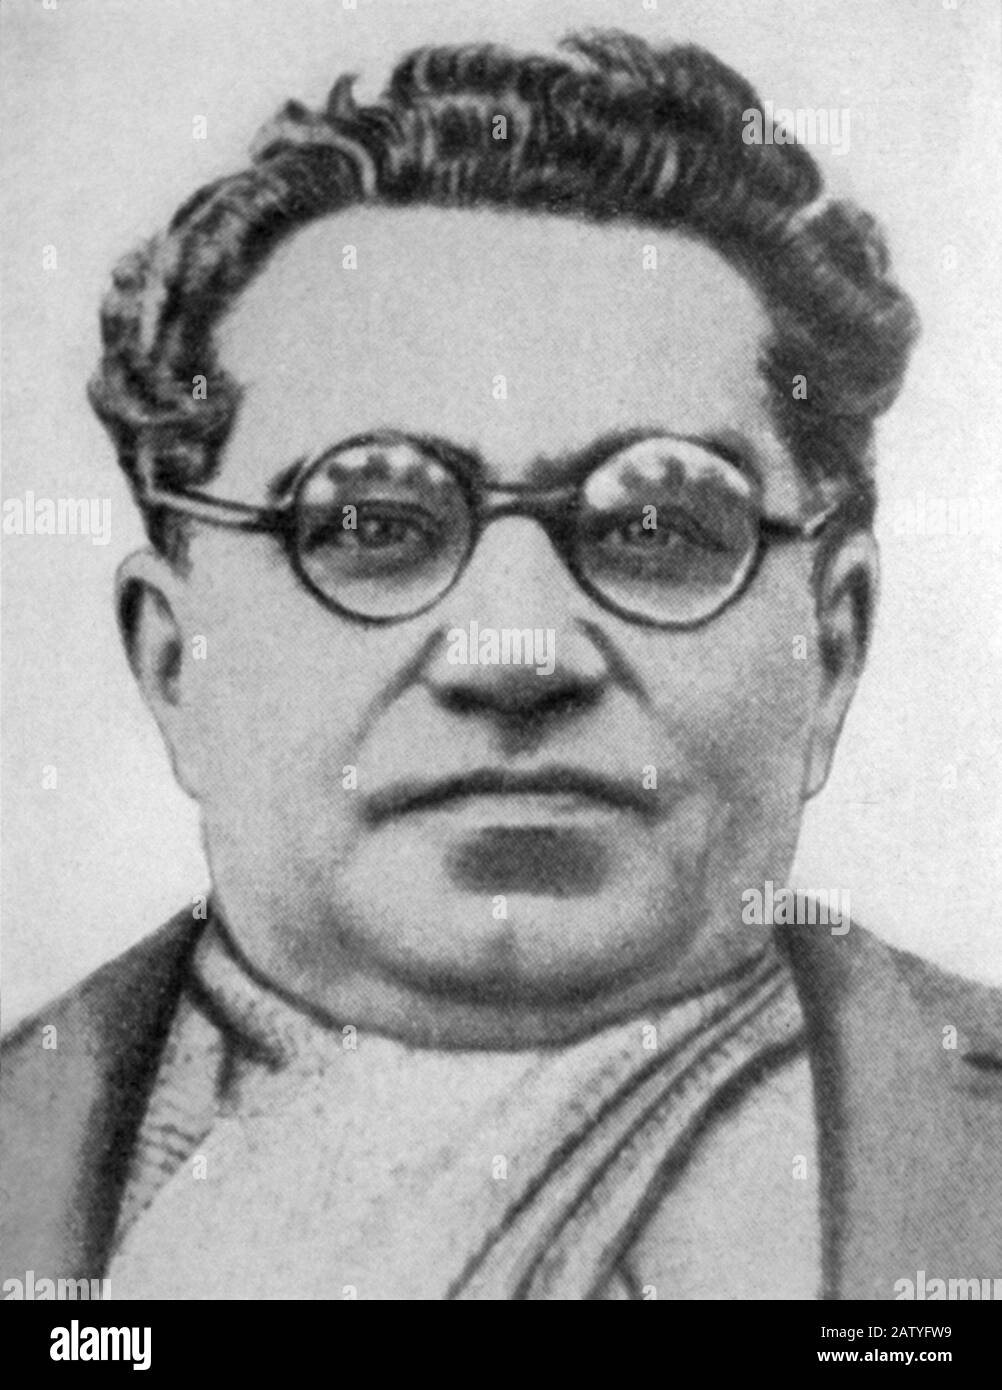 1937 ca.: ANTONIO GRAMSCI ( Ales , Oristano 1891 - Roma 1937 ) italienischer Intellektueller, Schriftsteller und Kommunist - PARTITO COMUNISTA ITALIANO - PCI - P Stockfoto